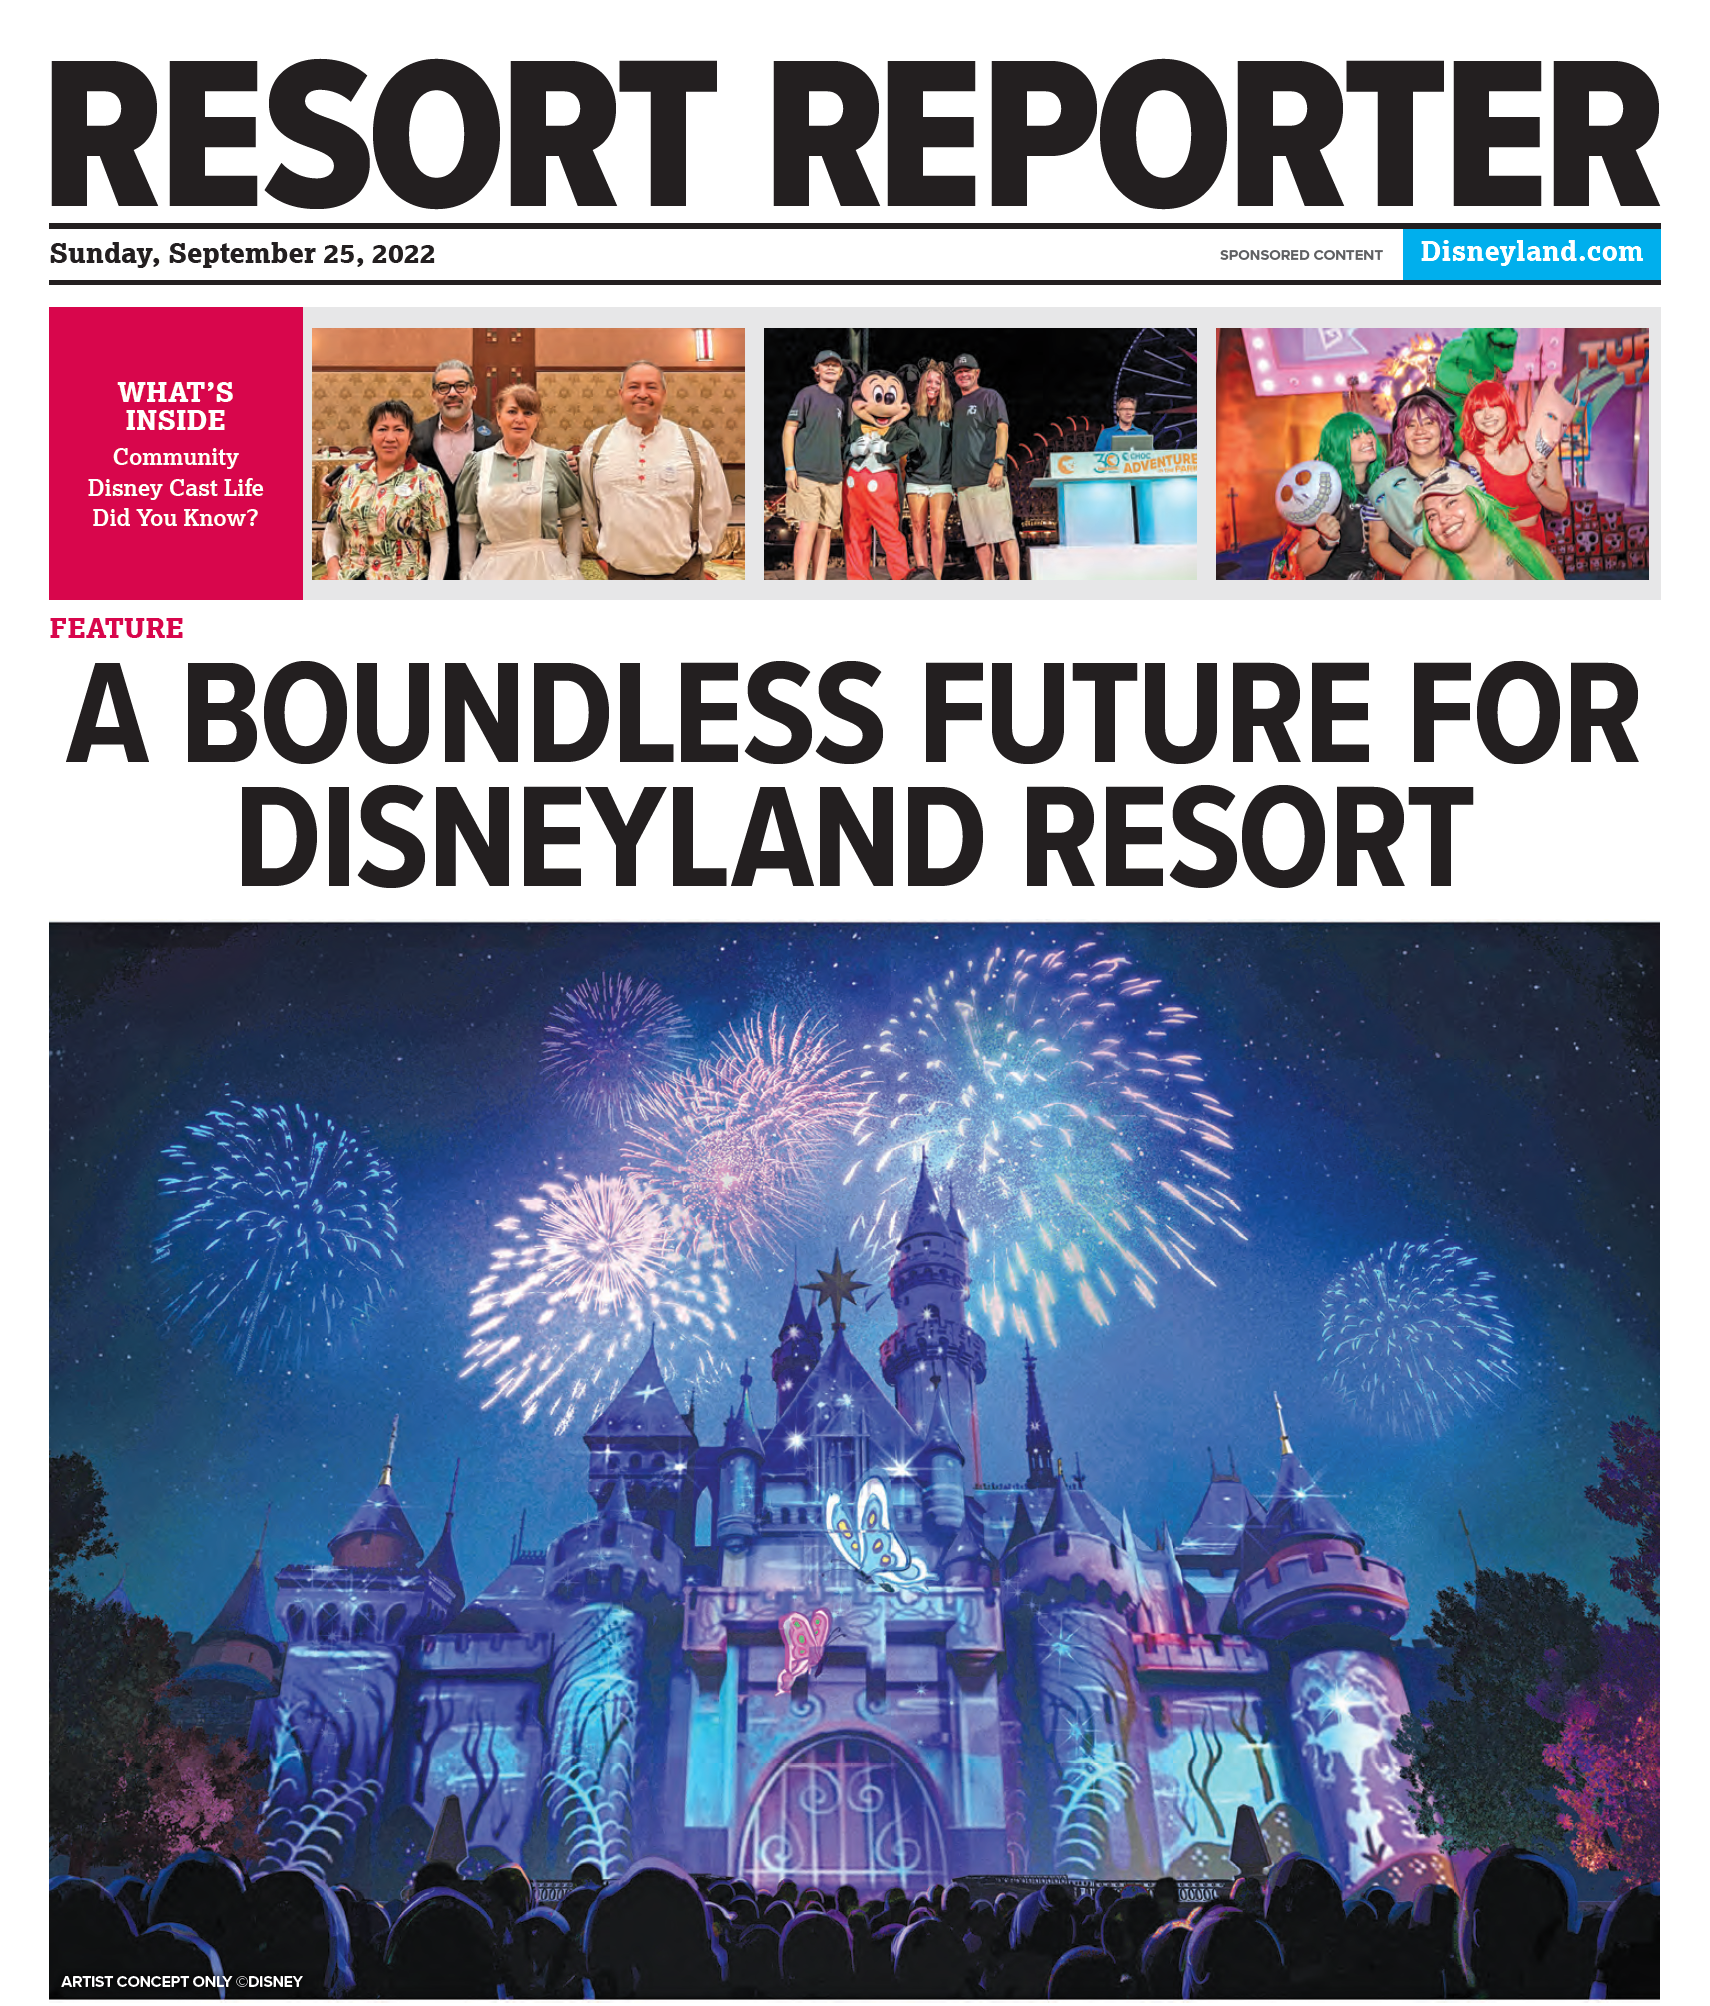 Resort Reporter Newspaper Image with Sleeping Beauty Castle